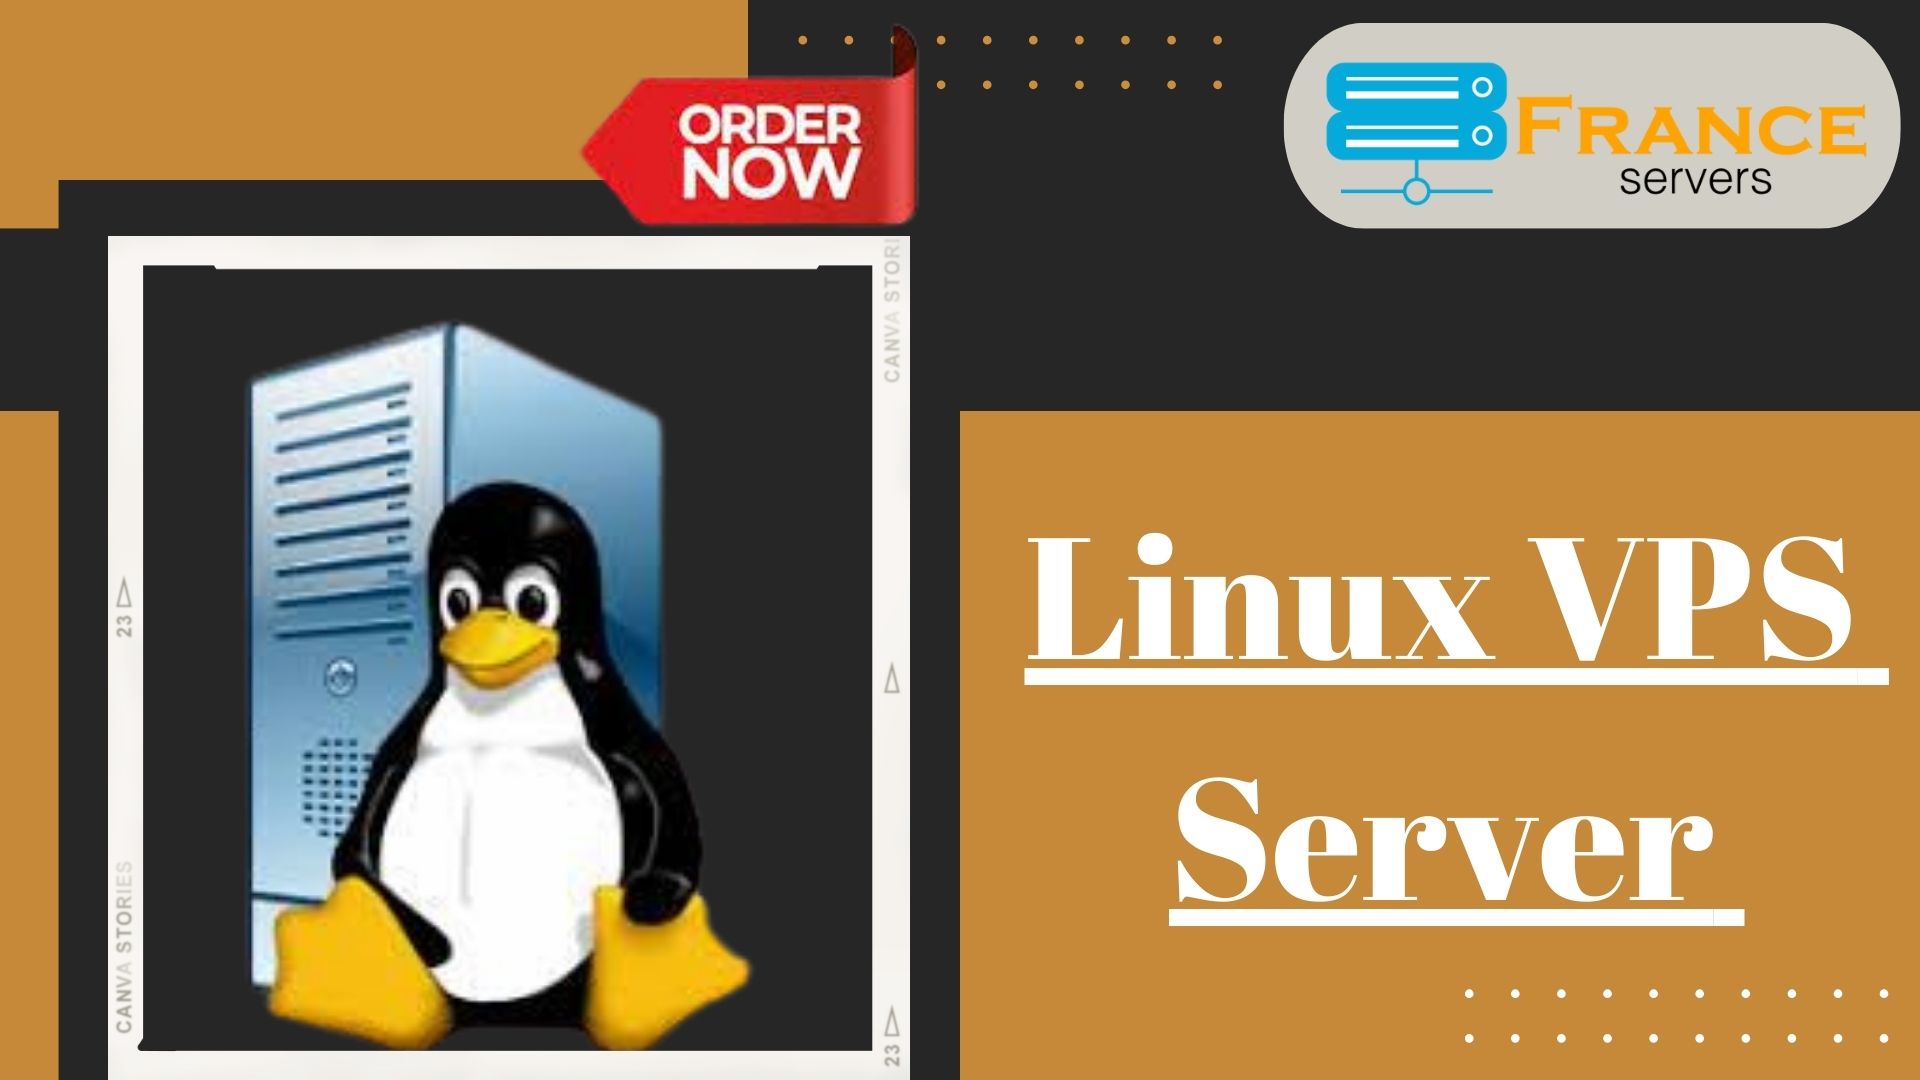 Linux VPS Server Benefits for Your Website in France